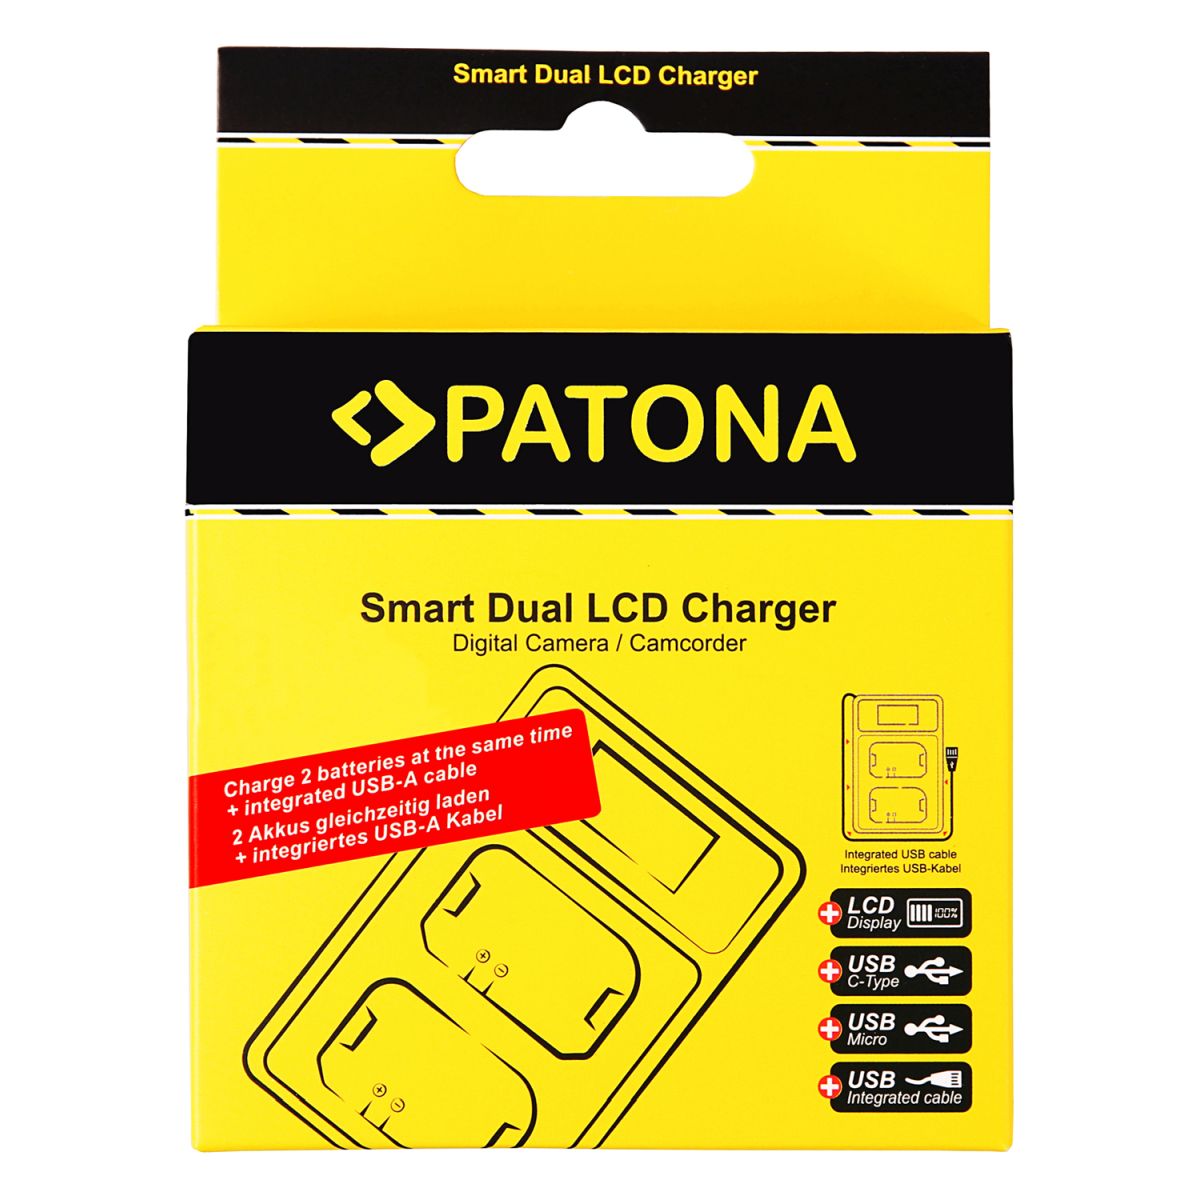 Patona Dual LCD USB Ladegerät Nikon EN-EL 15